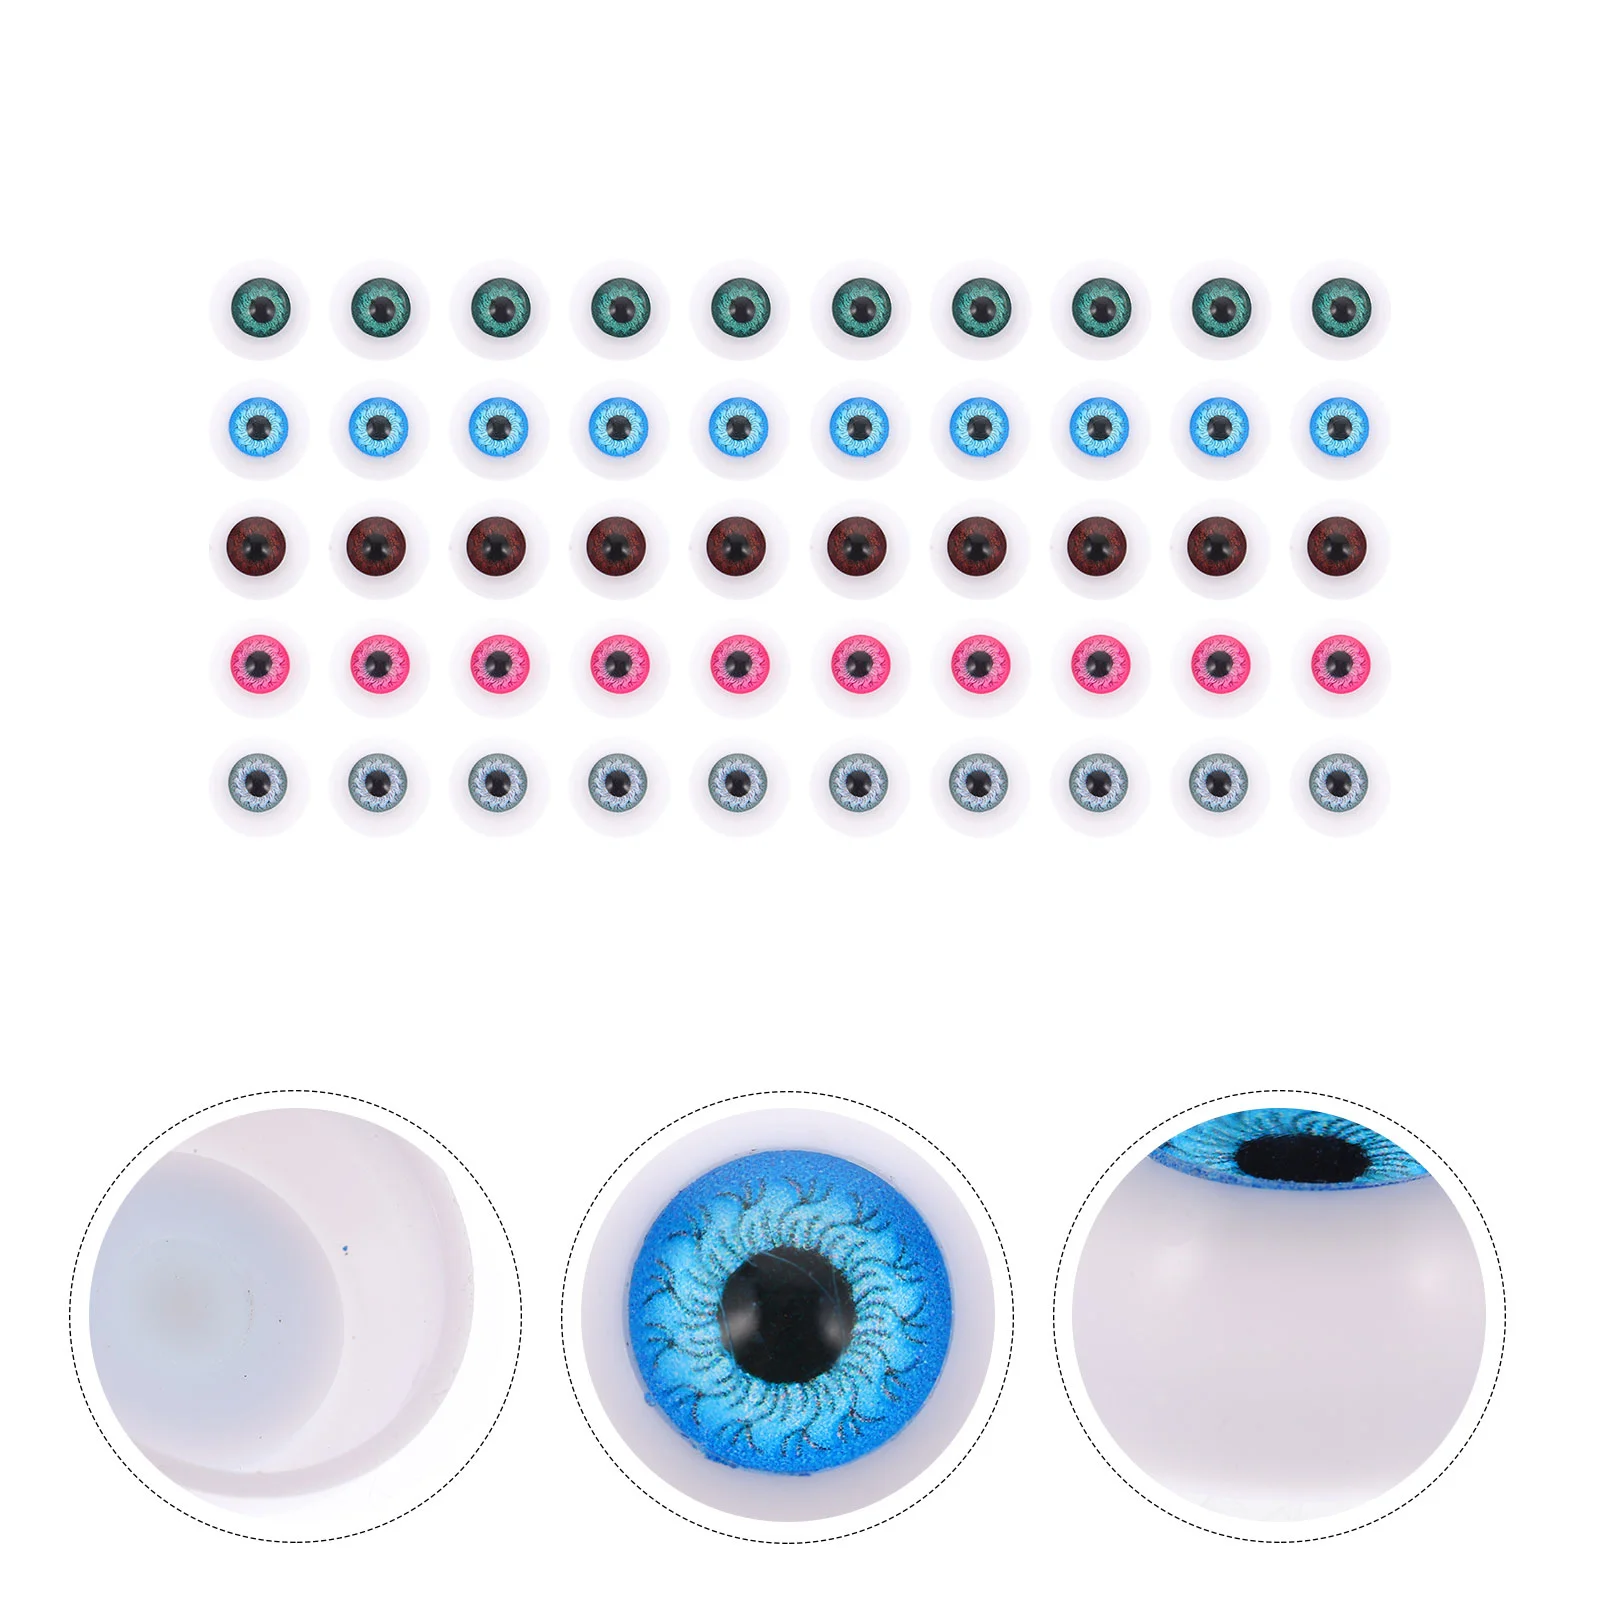 50 pcs artificial eyes decor diy craft supplies blue for eyes crafts eyeballs acrylic realistic bear 50 Pcs Decor Artificial Eyes Acrylic Eyes Realistic Three-dimensional DIY Crafts Acrylic Supplies for